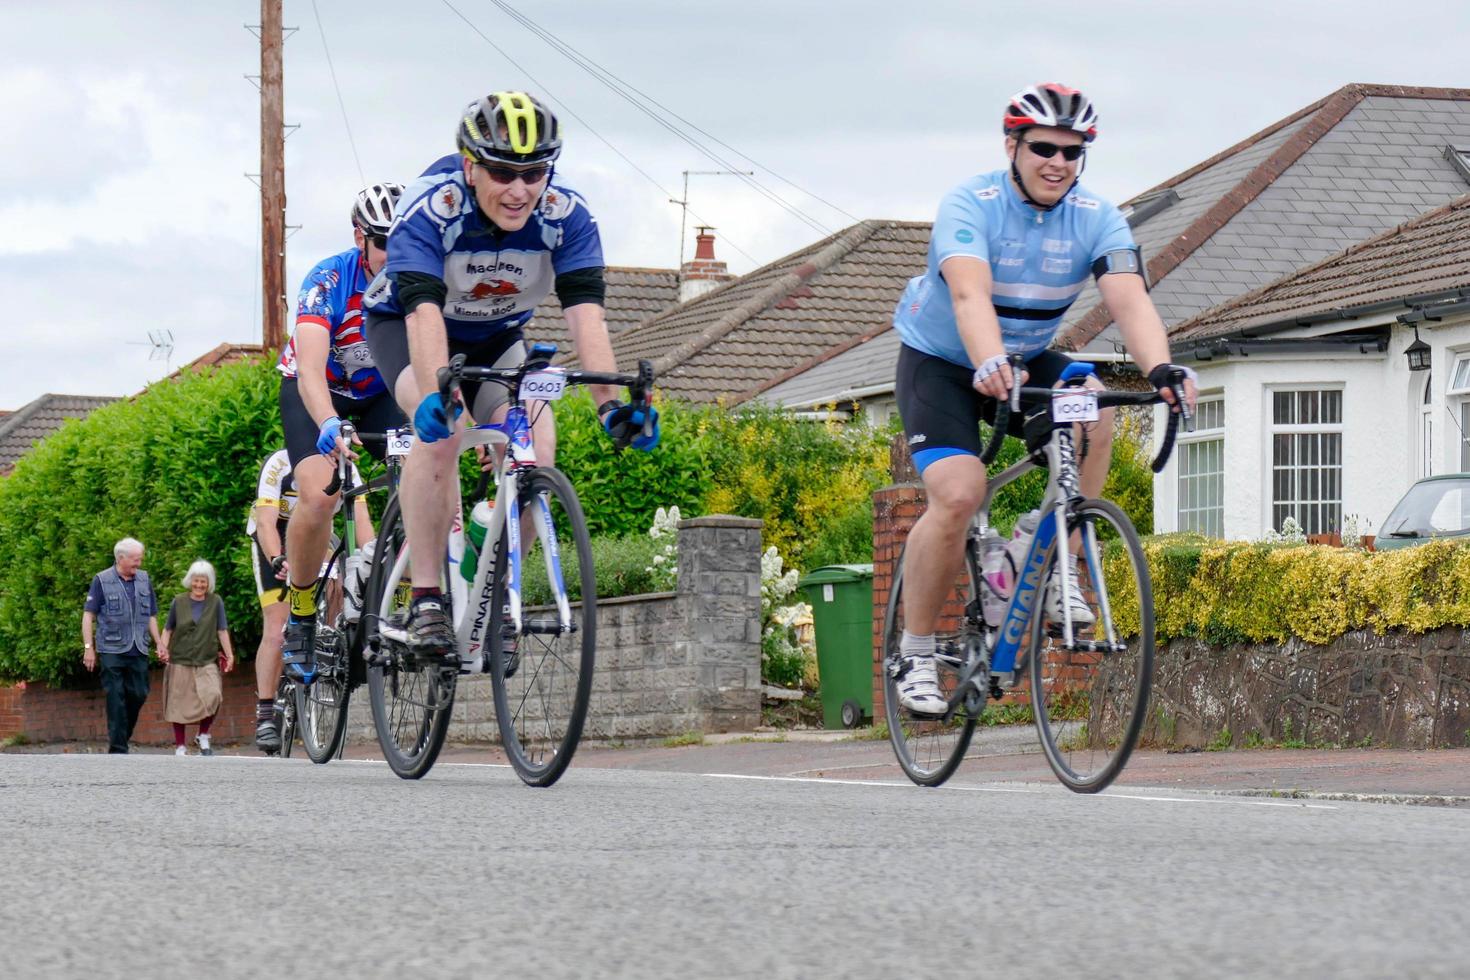 Cardiff, Wales, Storbritannien, 2015. cyklister som deltar i cykelevenemanget Velothon foto